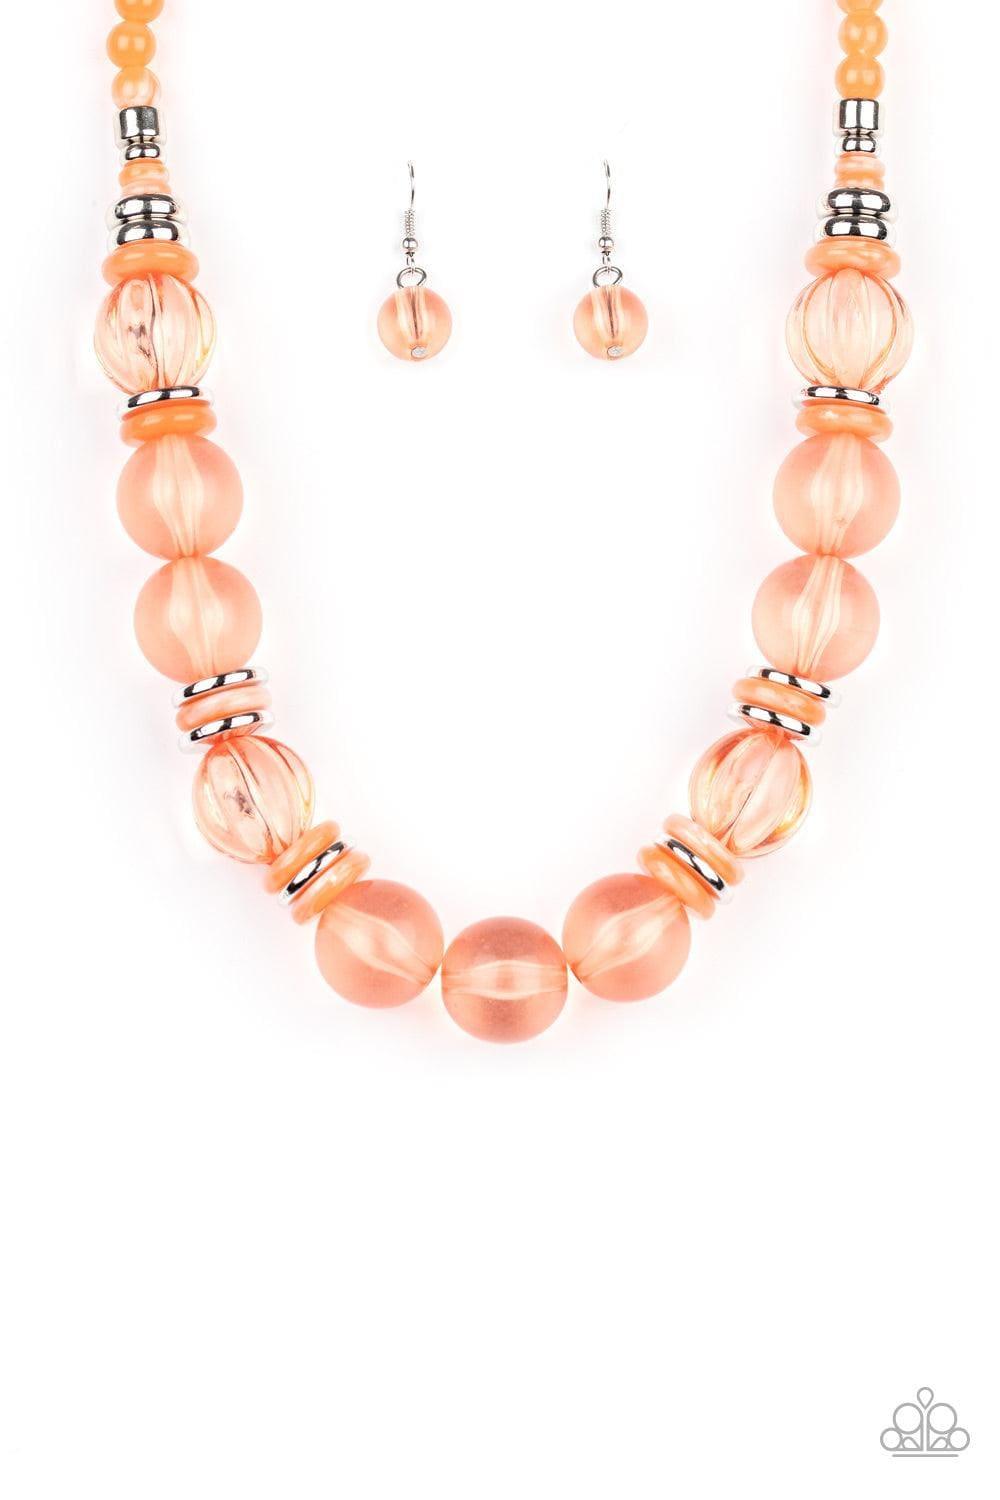 Paparazzi Accessories - Bubbly Beauty - Orange Necklace - Bling by JessieK